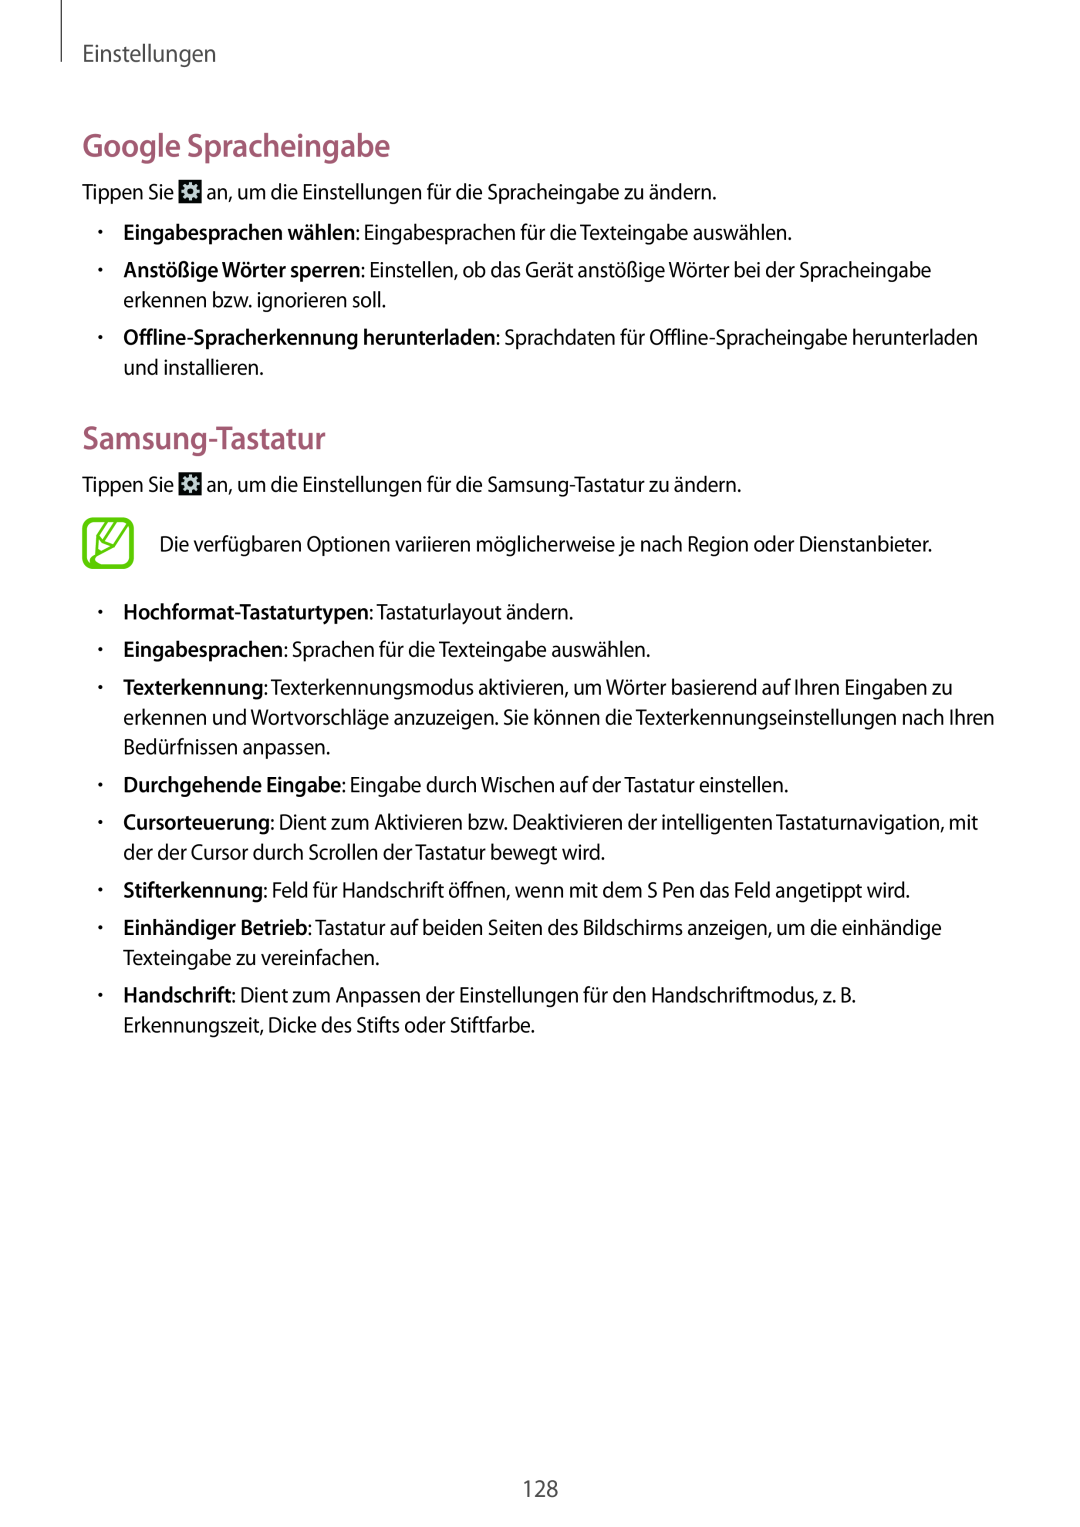 Samsung GT-N7100VSDDBT manual Google Spracheingabe, Samsung-Tastatur, Hochformat-Tastaturtypen Tastaturlayout ändern 